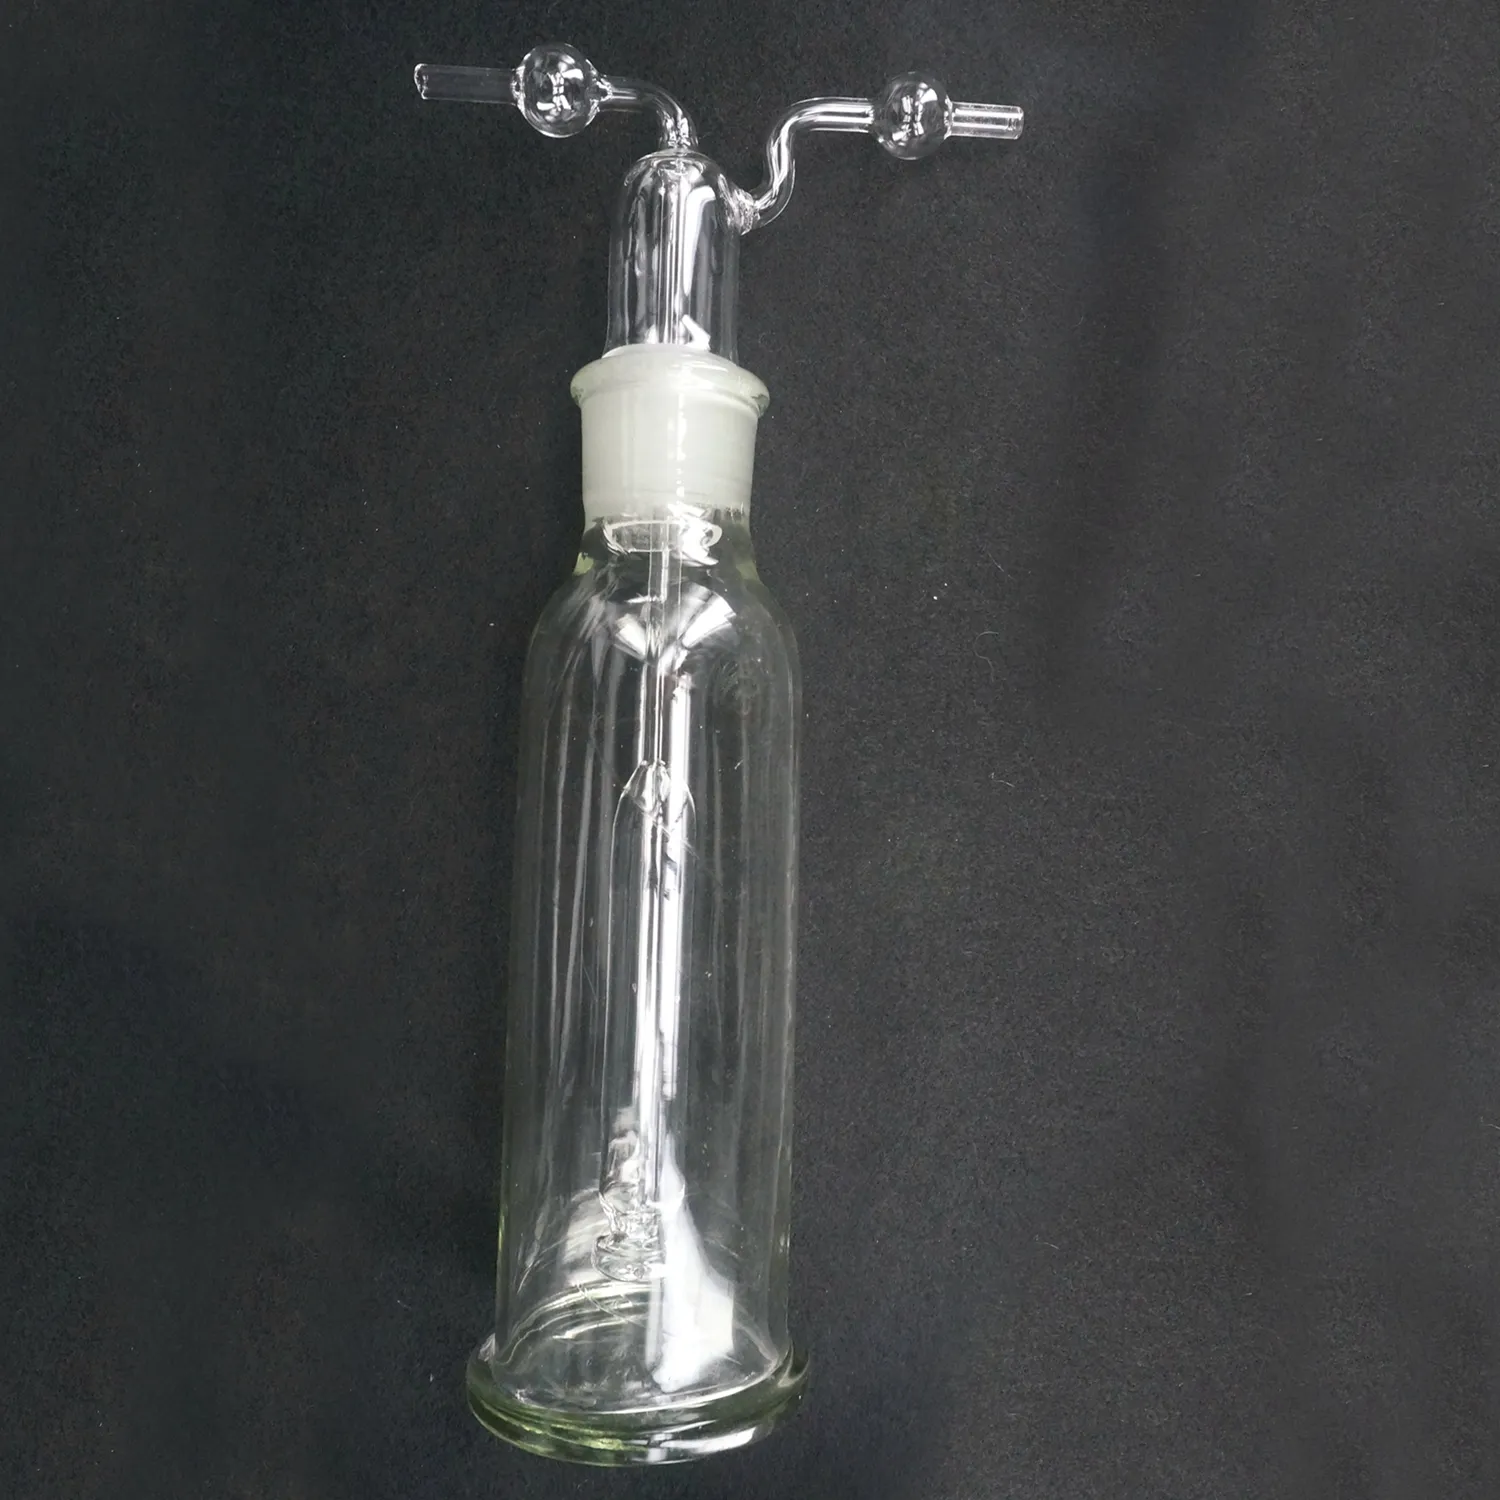 Wholesale-ラボ250mlガラスガス洗浄ボトルマルチホールガラスウェアインスツルメンツラボ使用